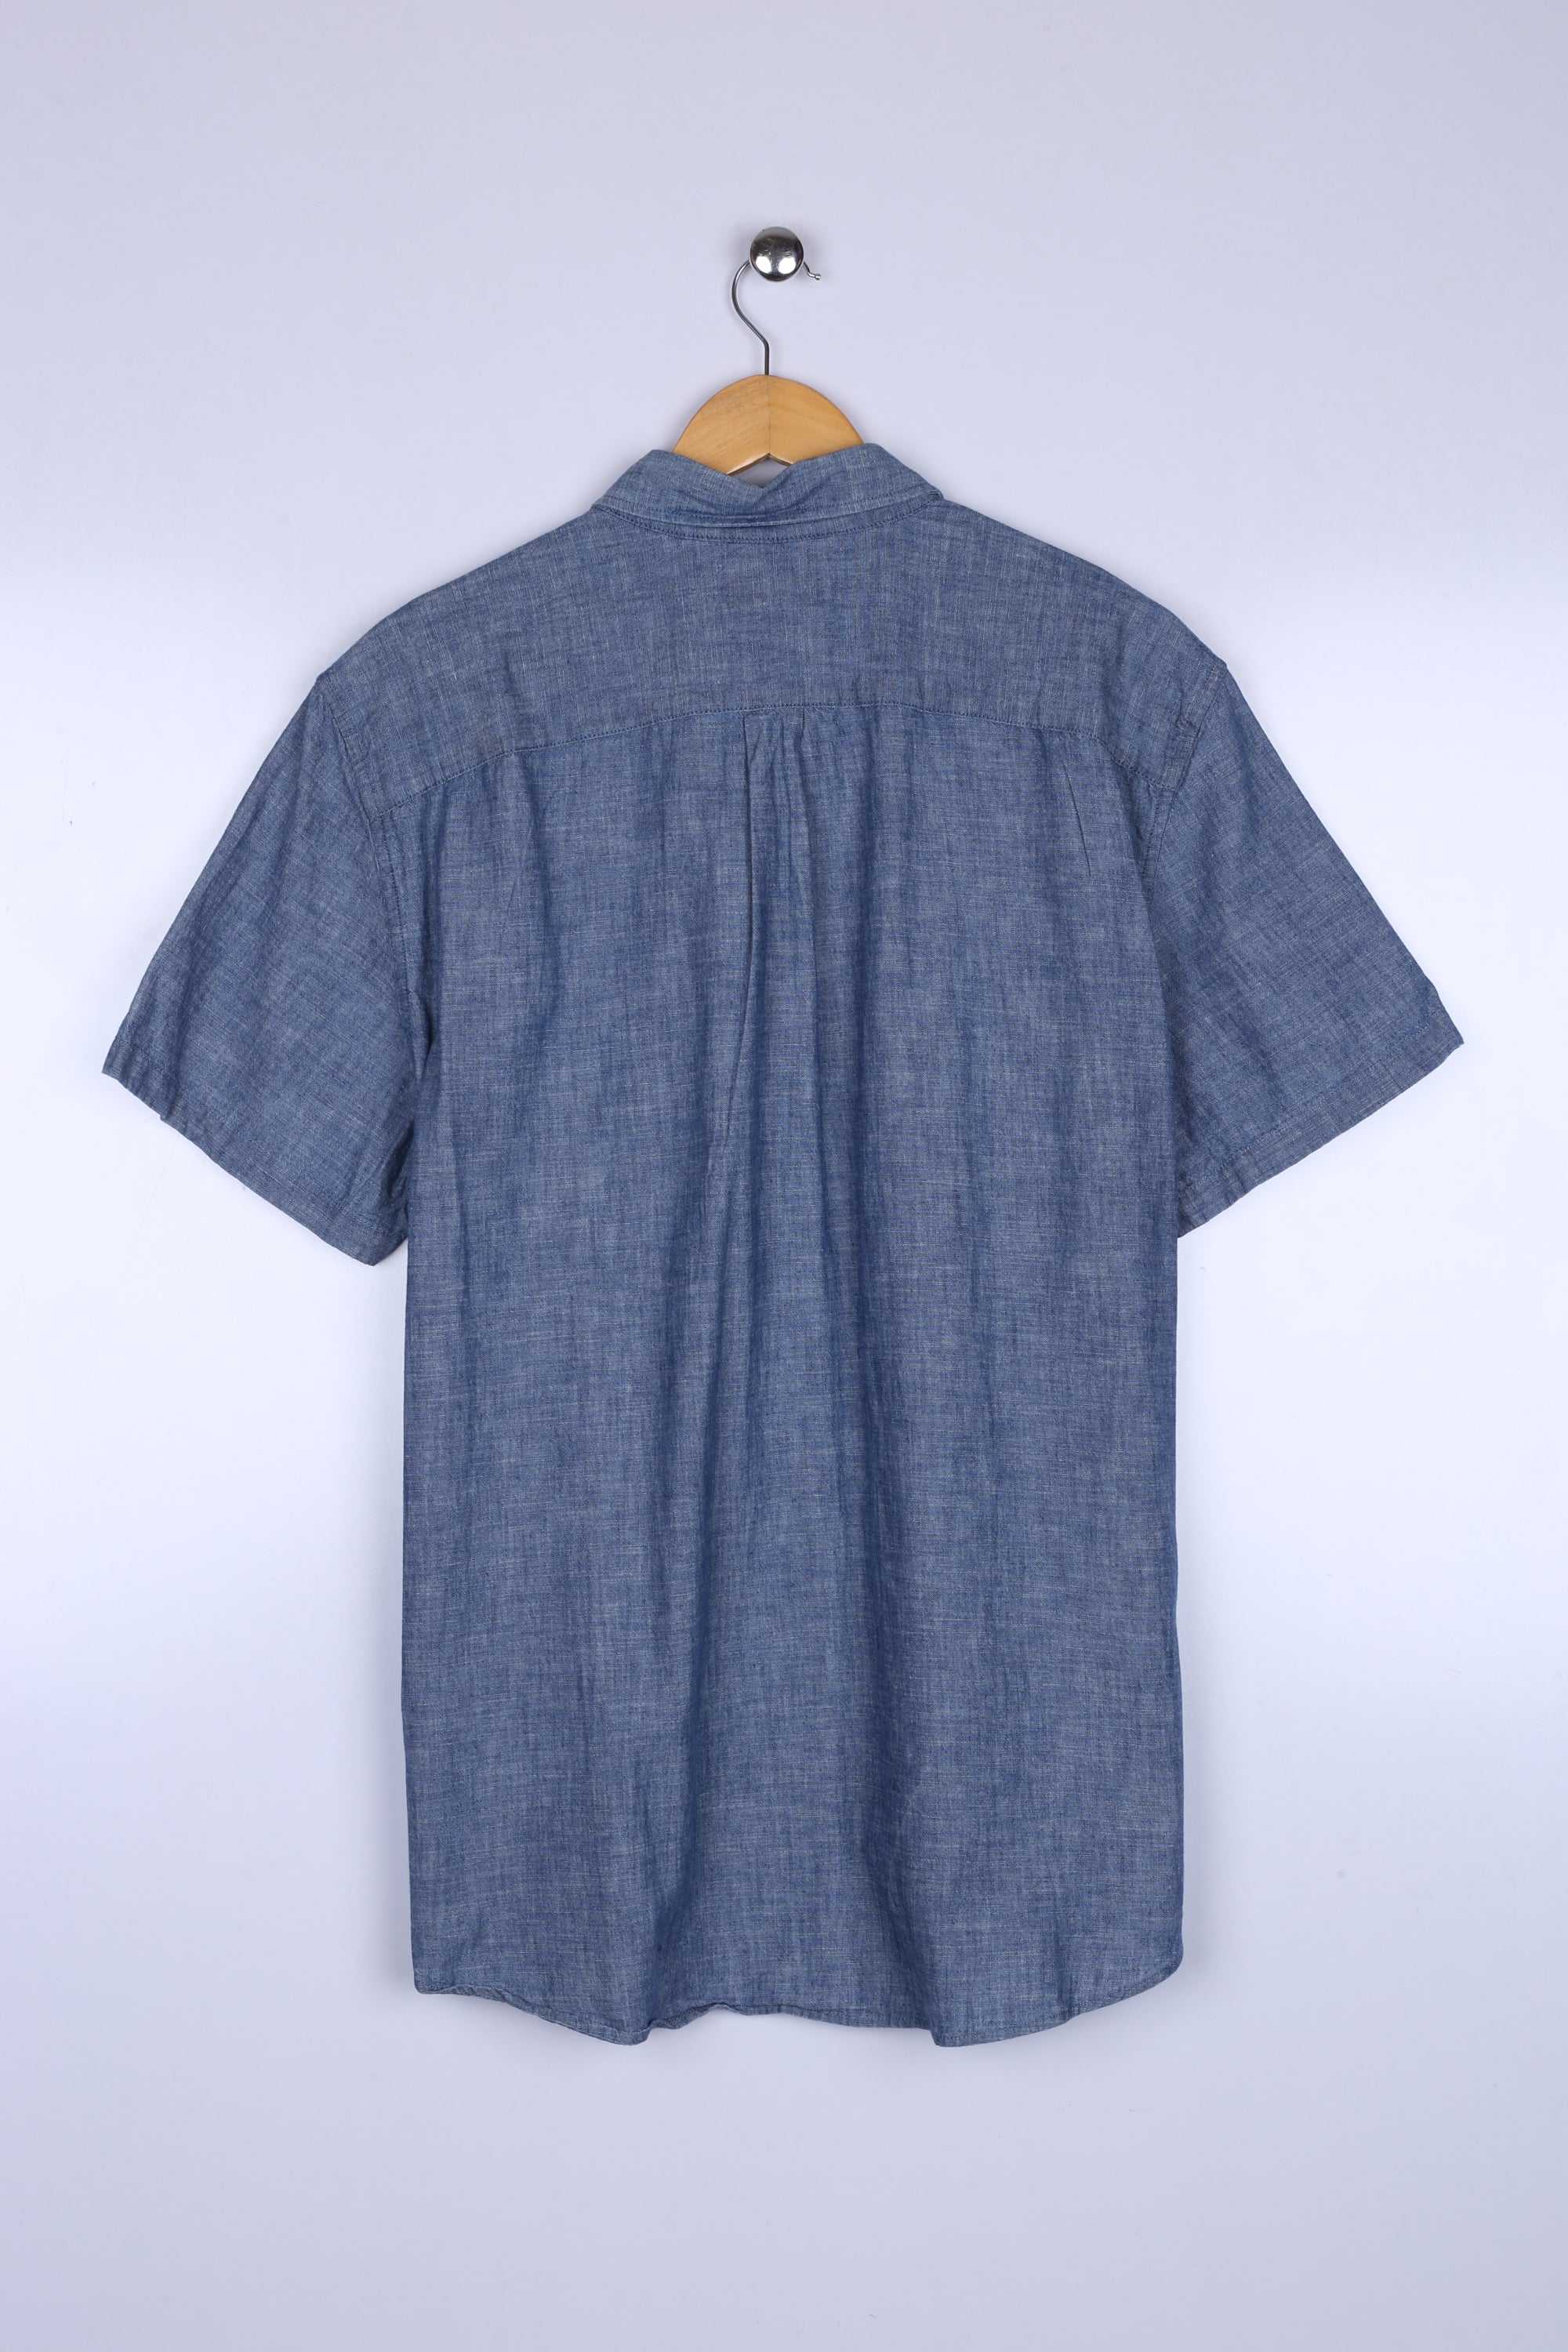 Vintage GAP Half Sleeve Shirt Navy